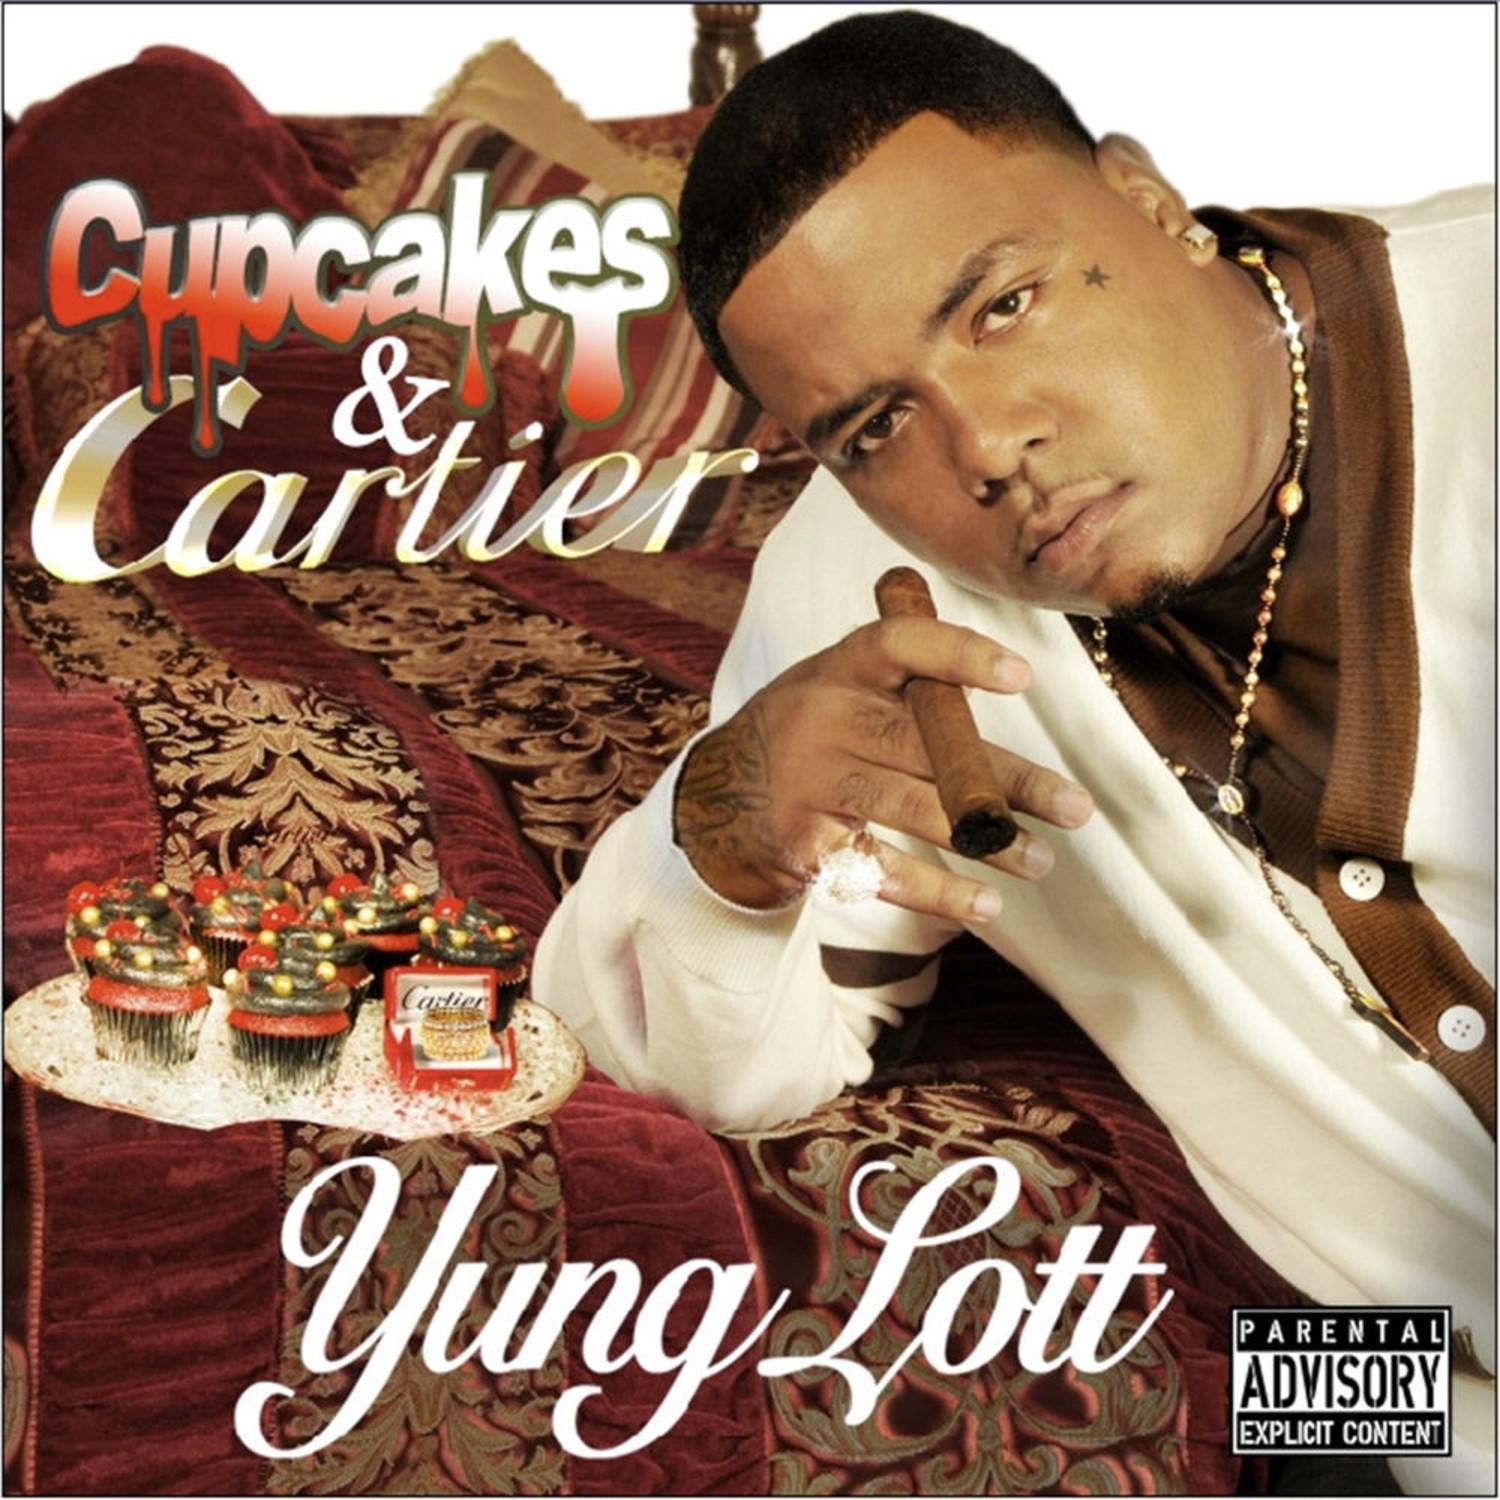 Cupcakes & Cartier